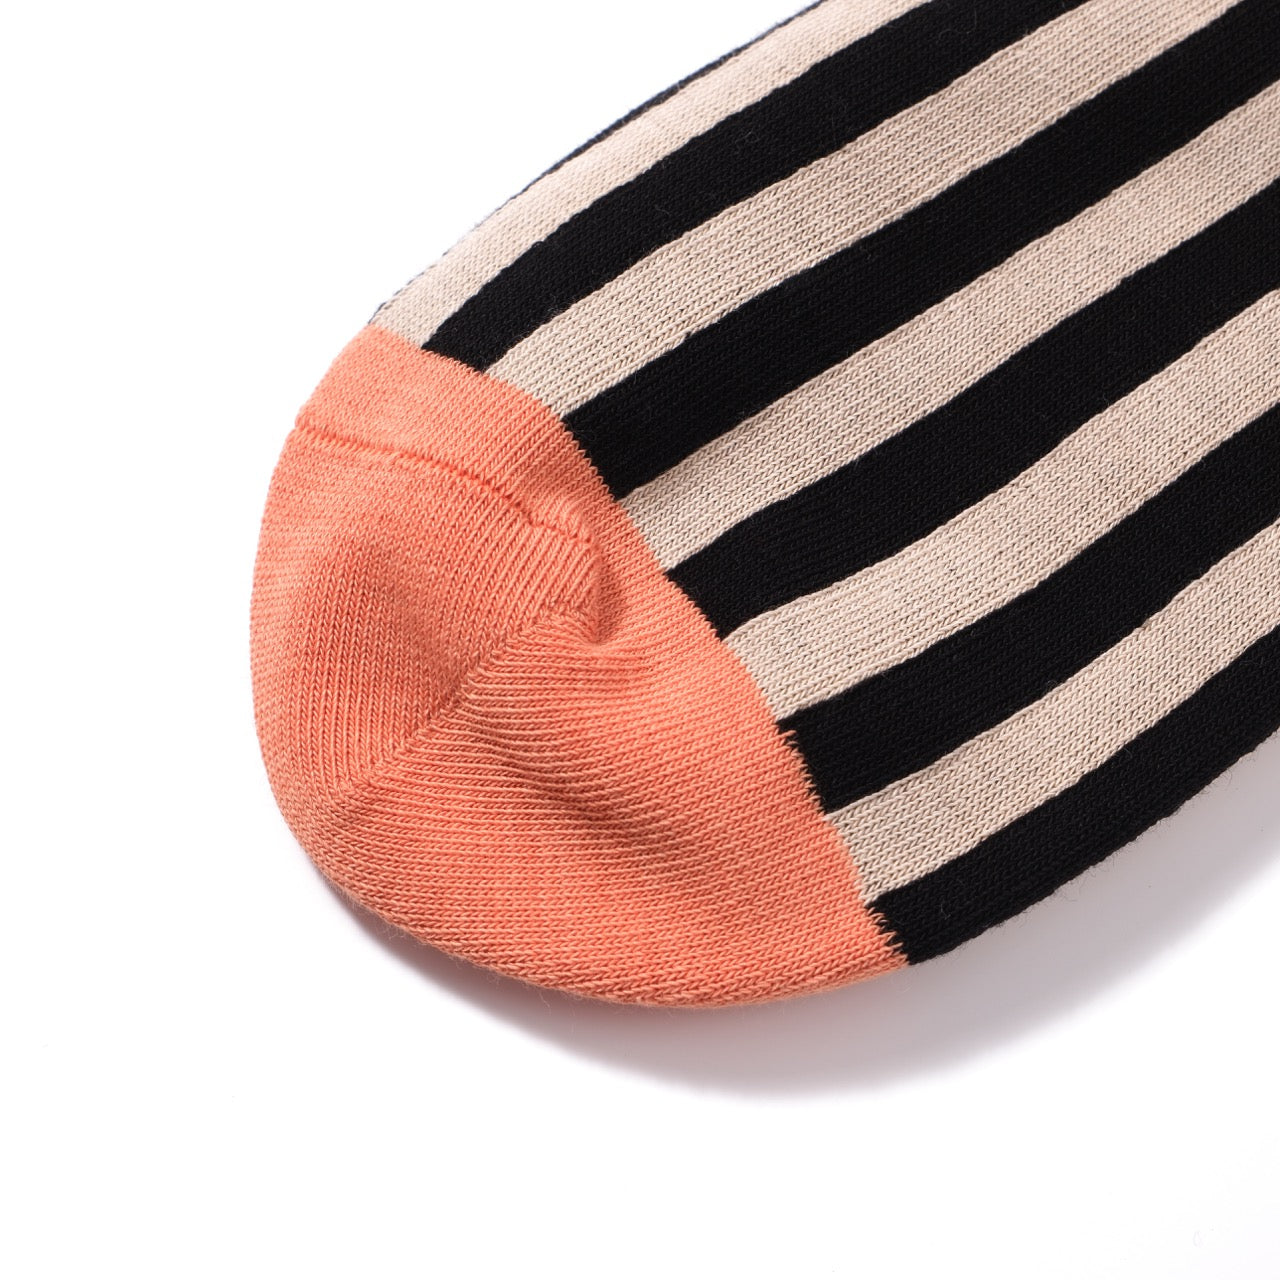 Striped Socks Mid-Calf Vertical Stripes Contrast Color Cotton Socks